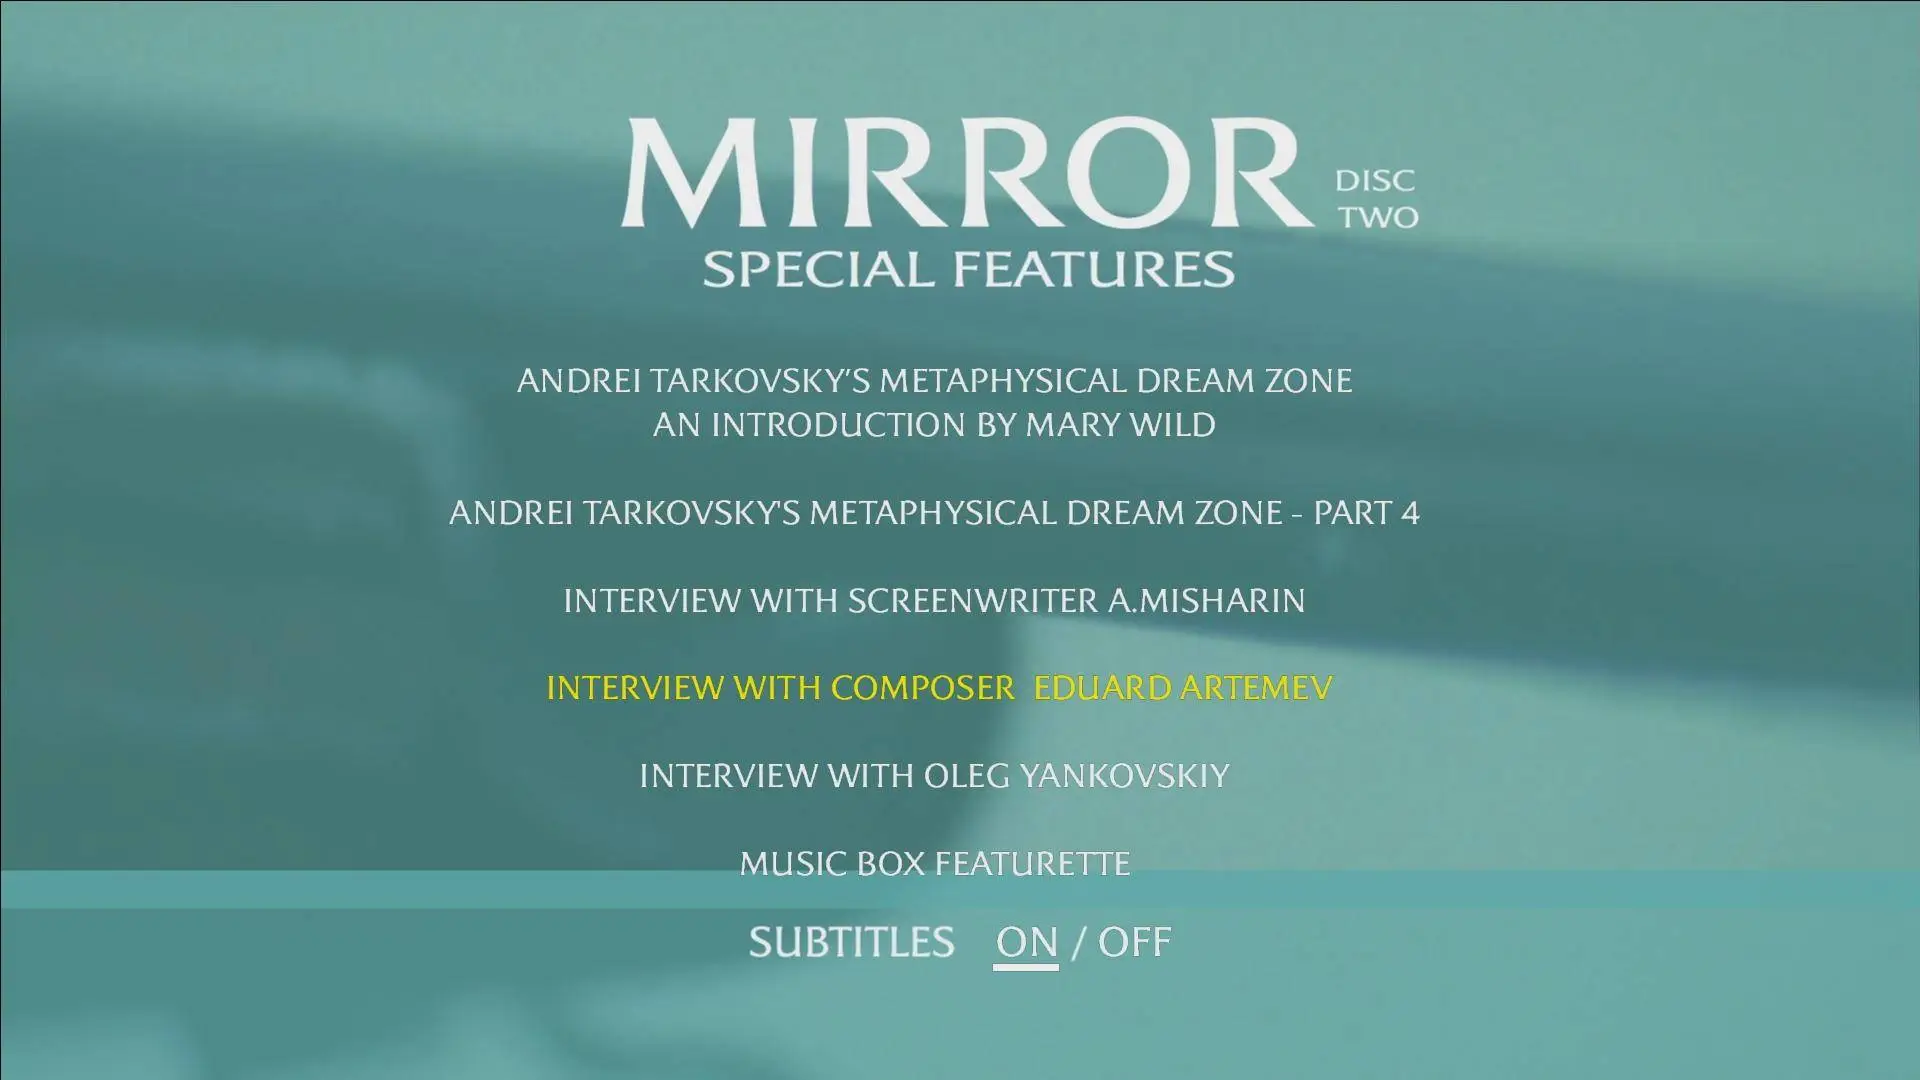 Zerkalo / The Mirror / Зеркало (1975) [ReUp]